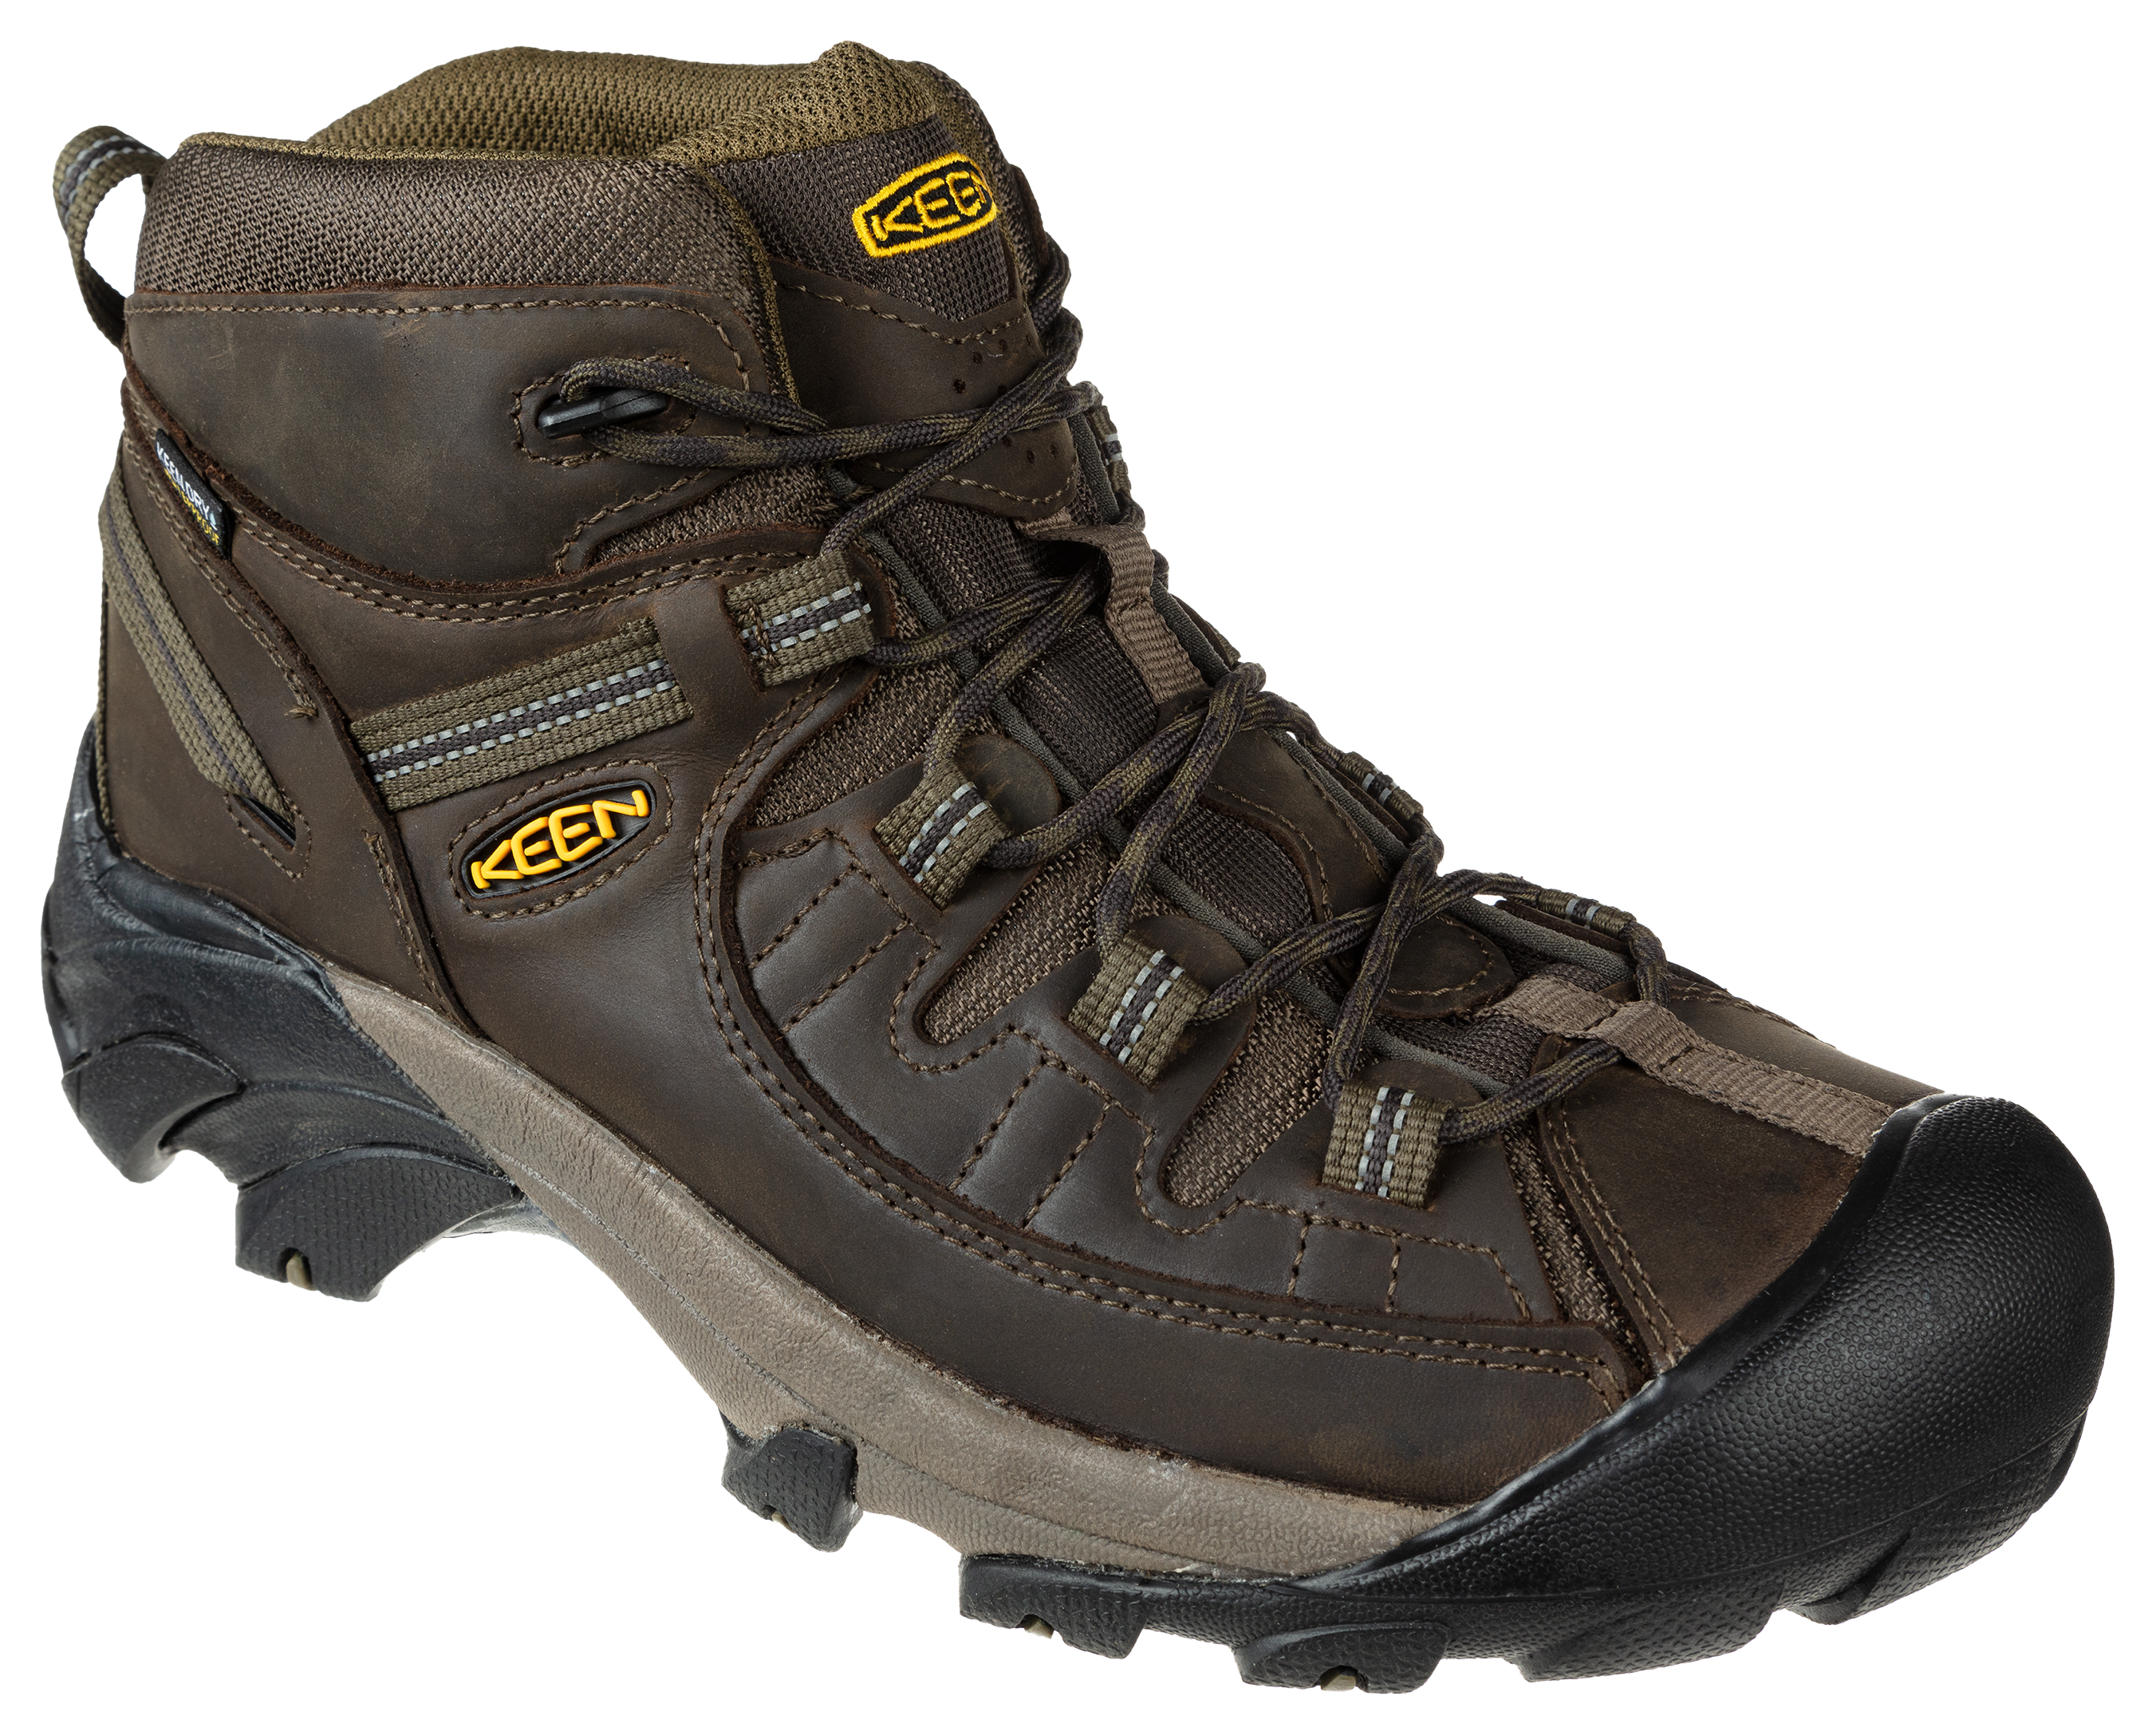 KEEN Targhee II Mid Waterproof Hiking Boots for Men - Canteen/Dark Olive - 11.5W